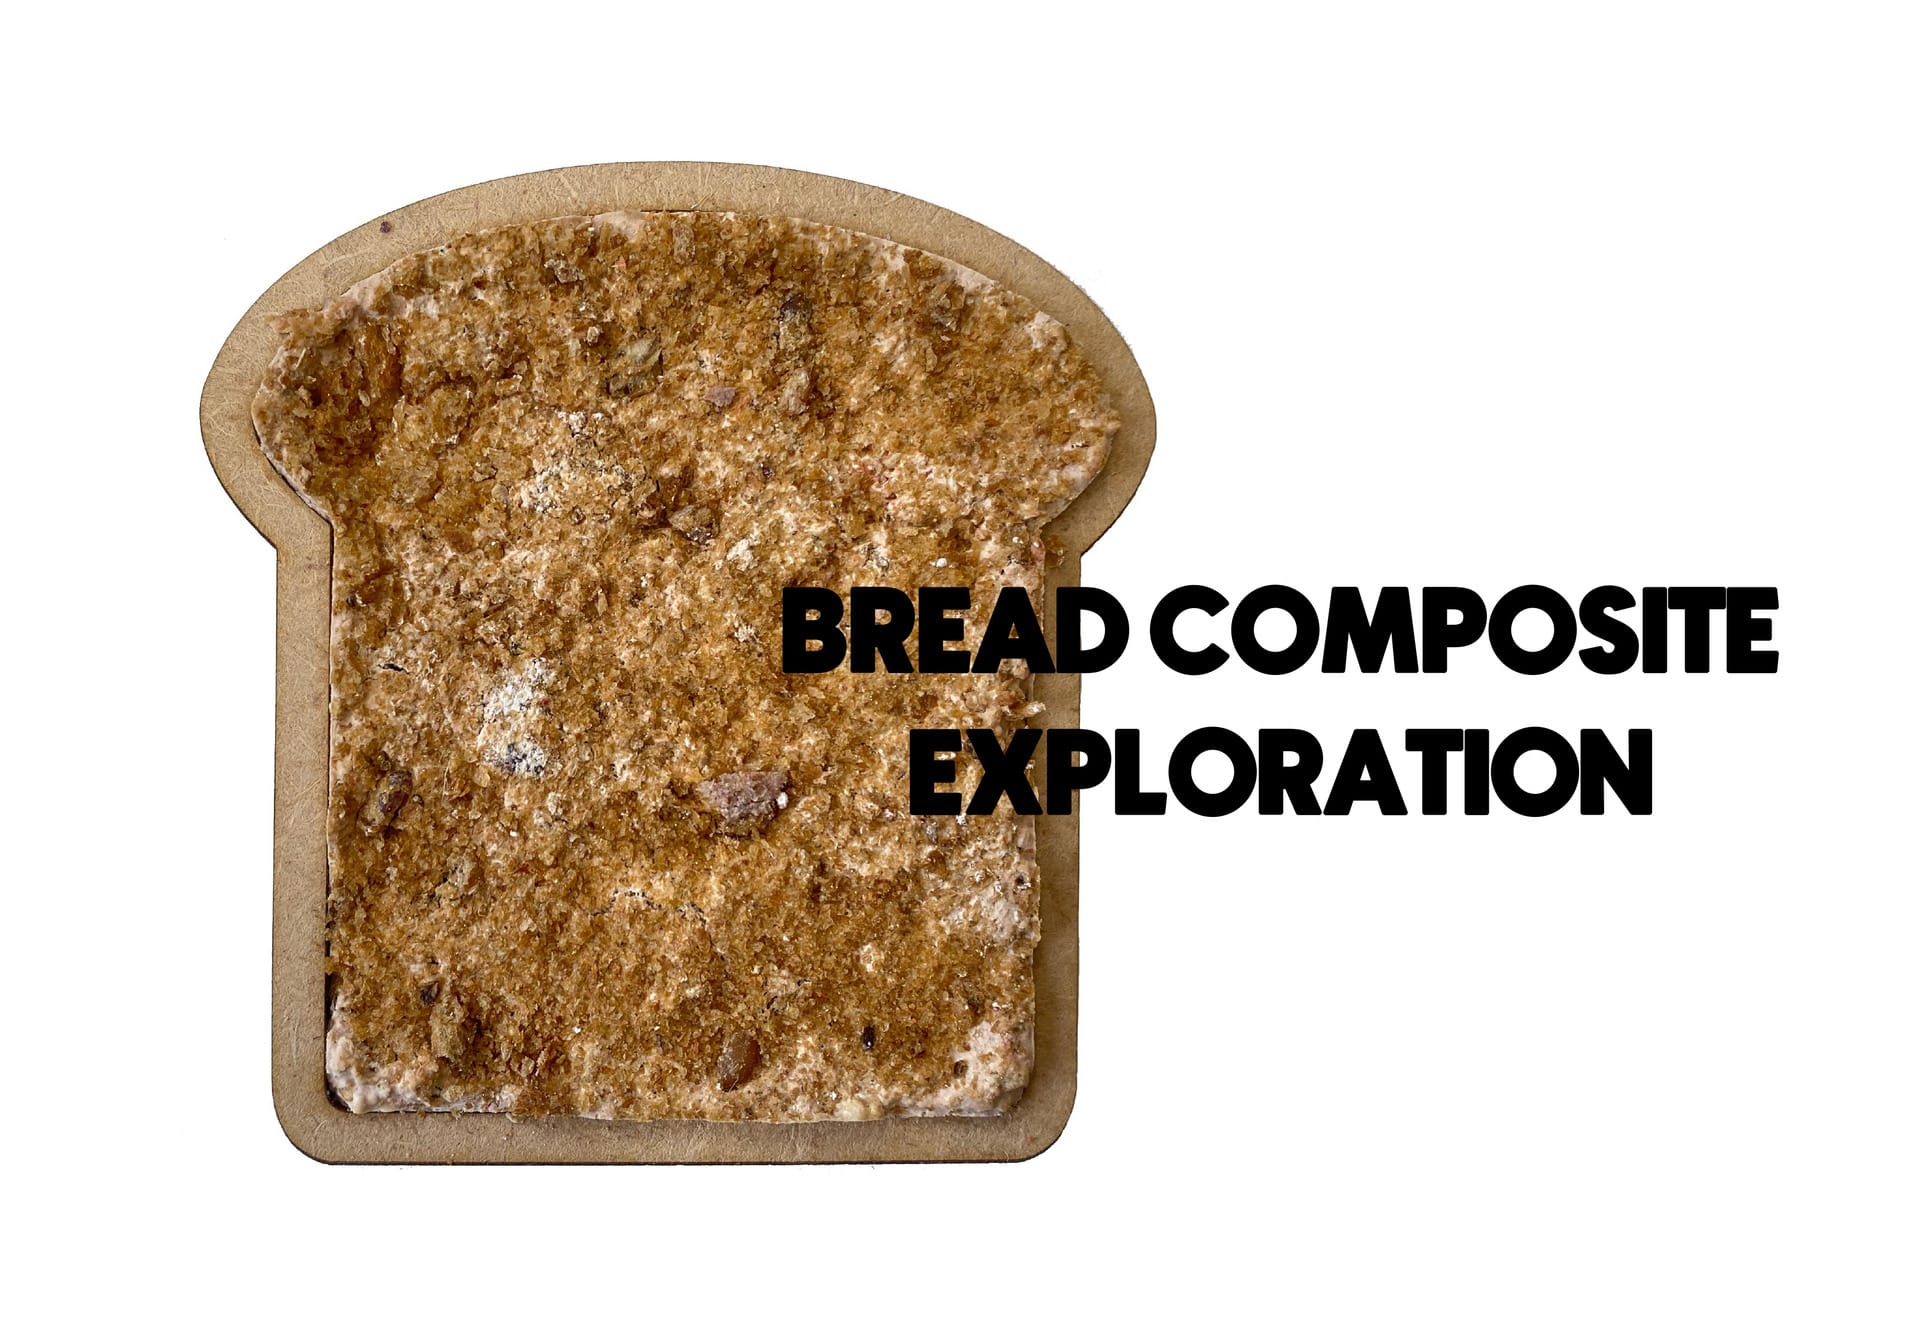 Exploration - Bread-based Composites, media item 1